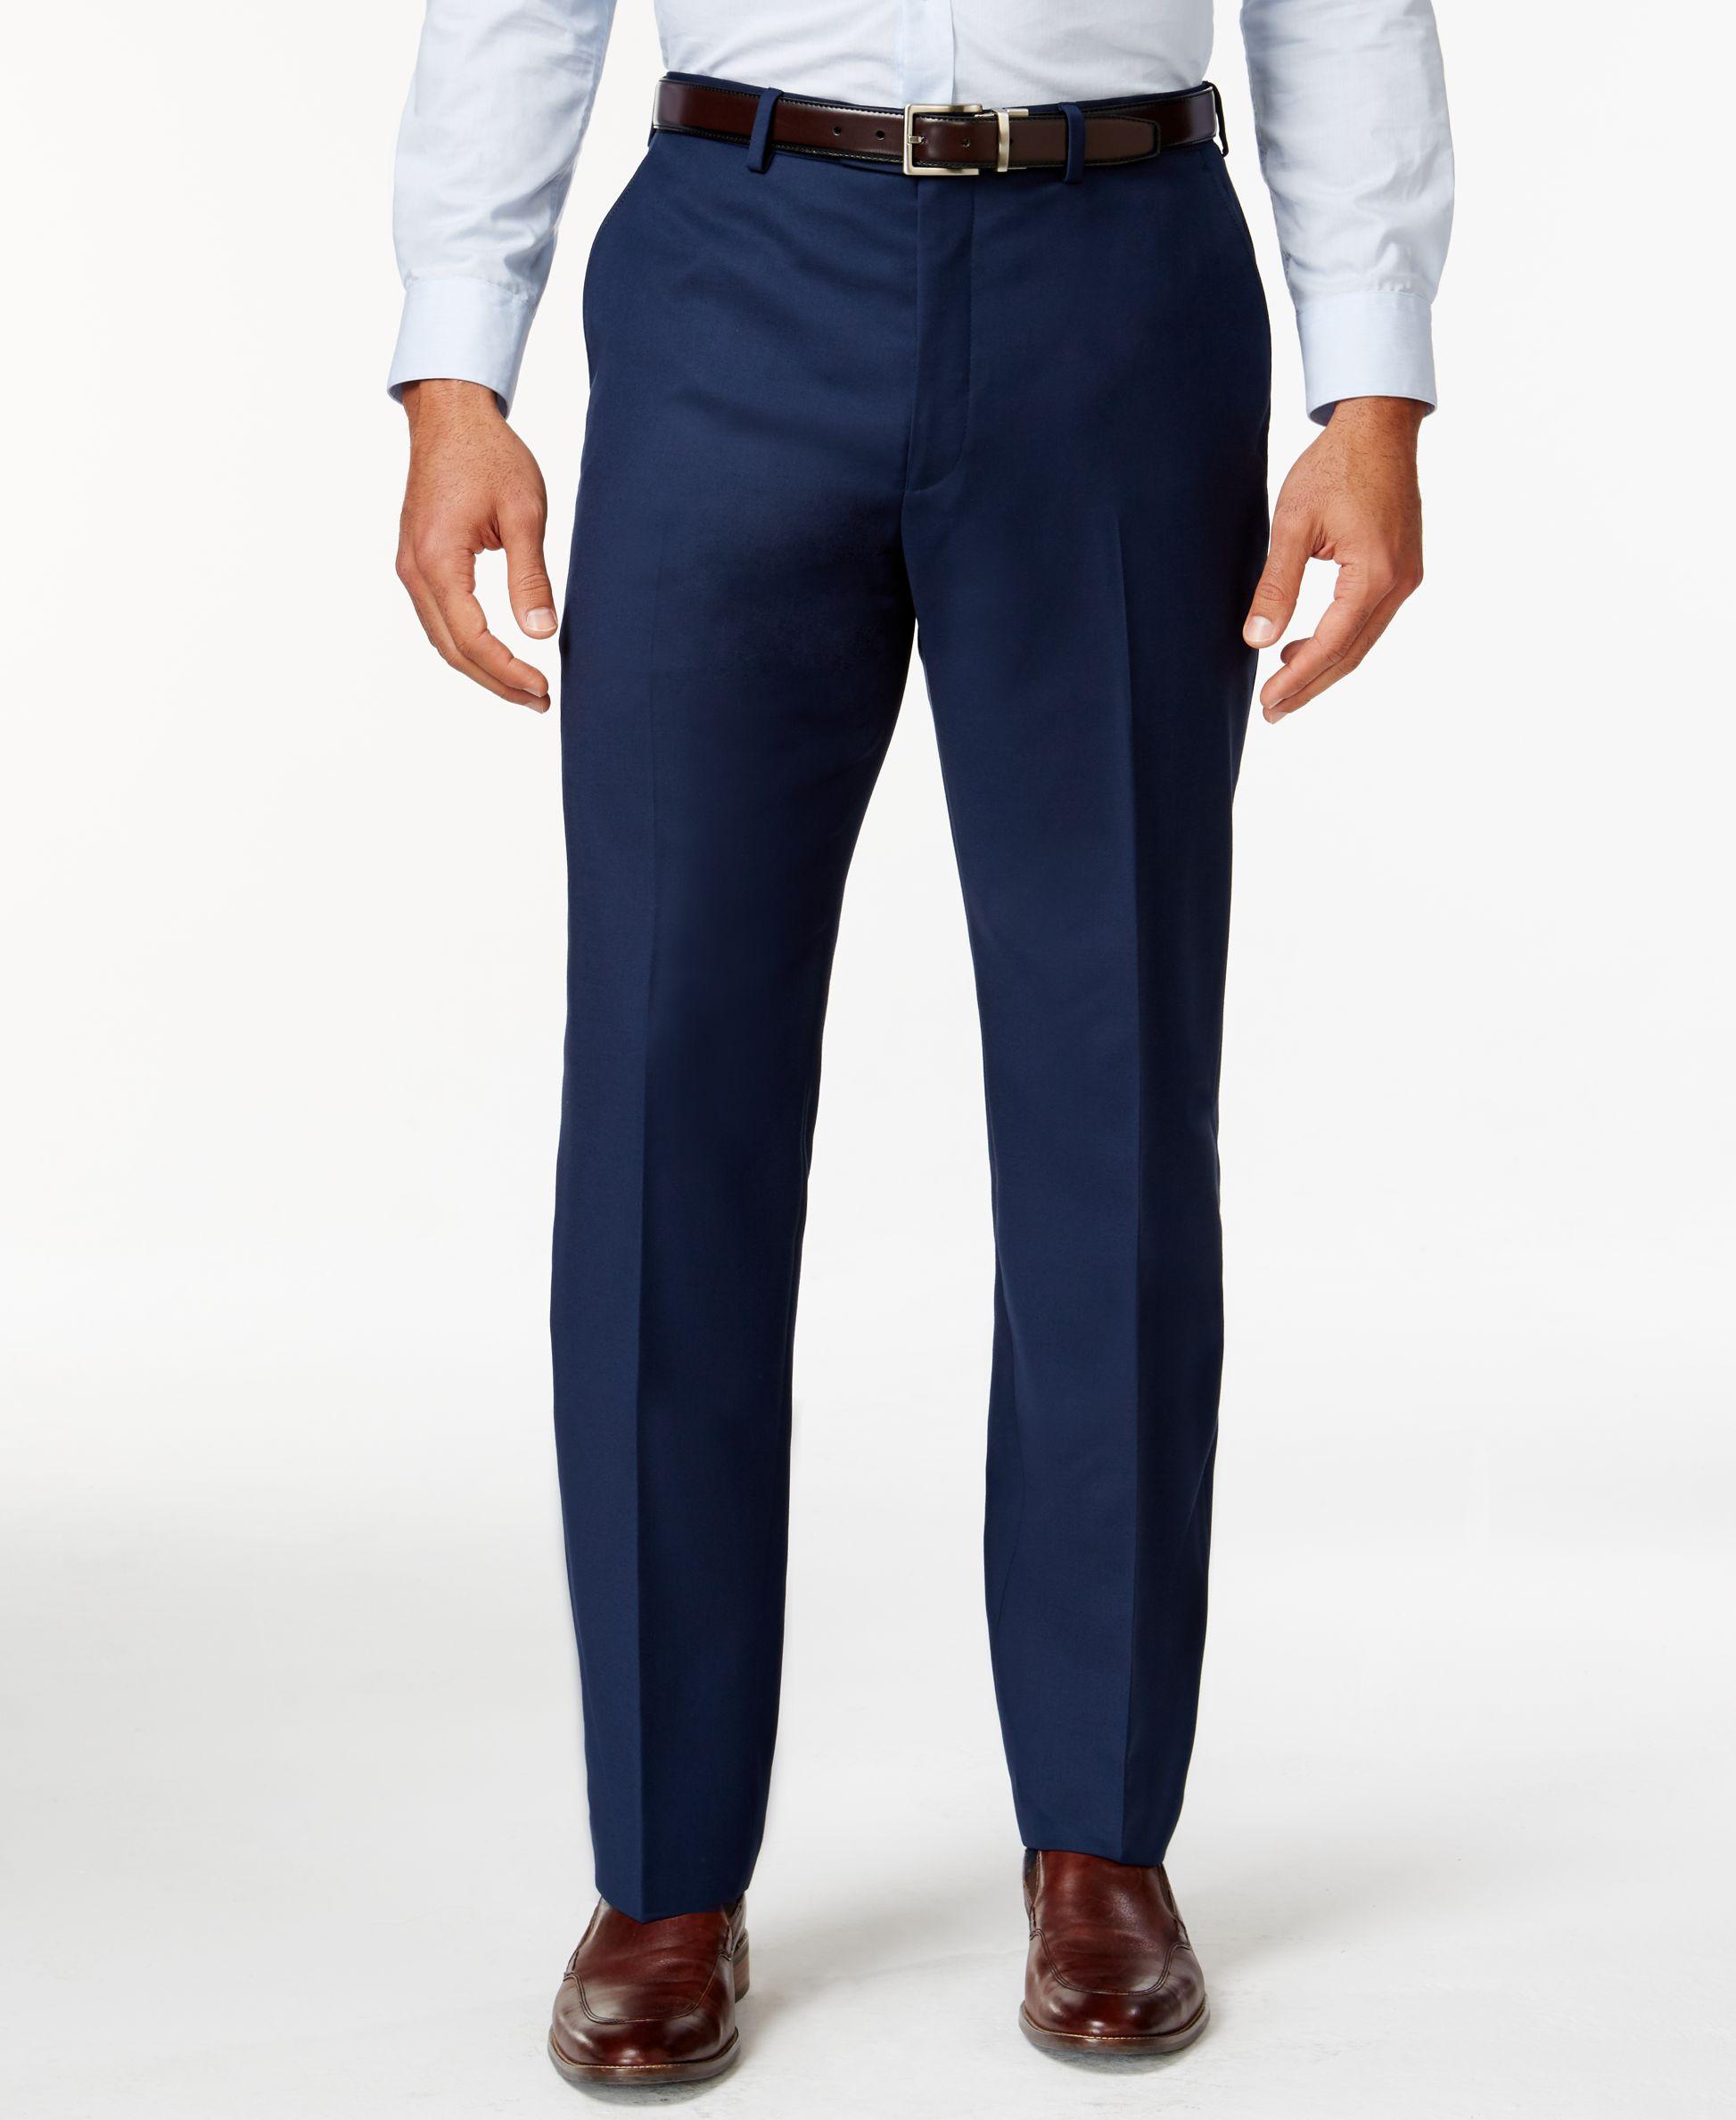 Michael Kors Synthetic Dress Pants Blue Solid for Men - Lyst